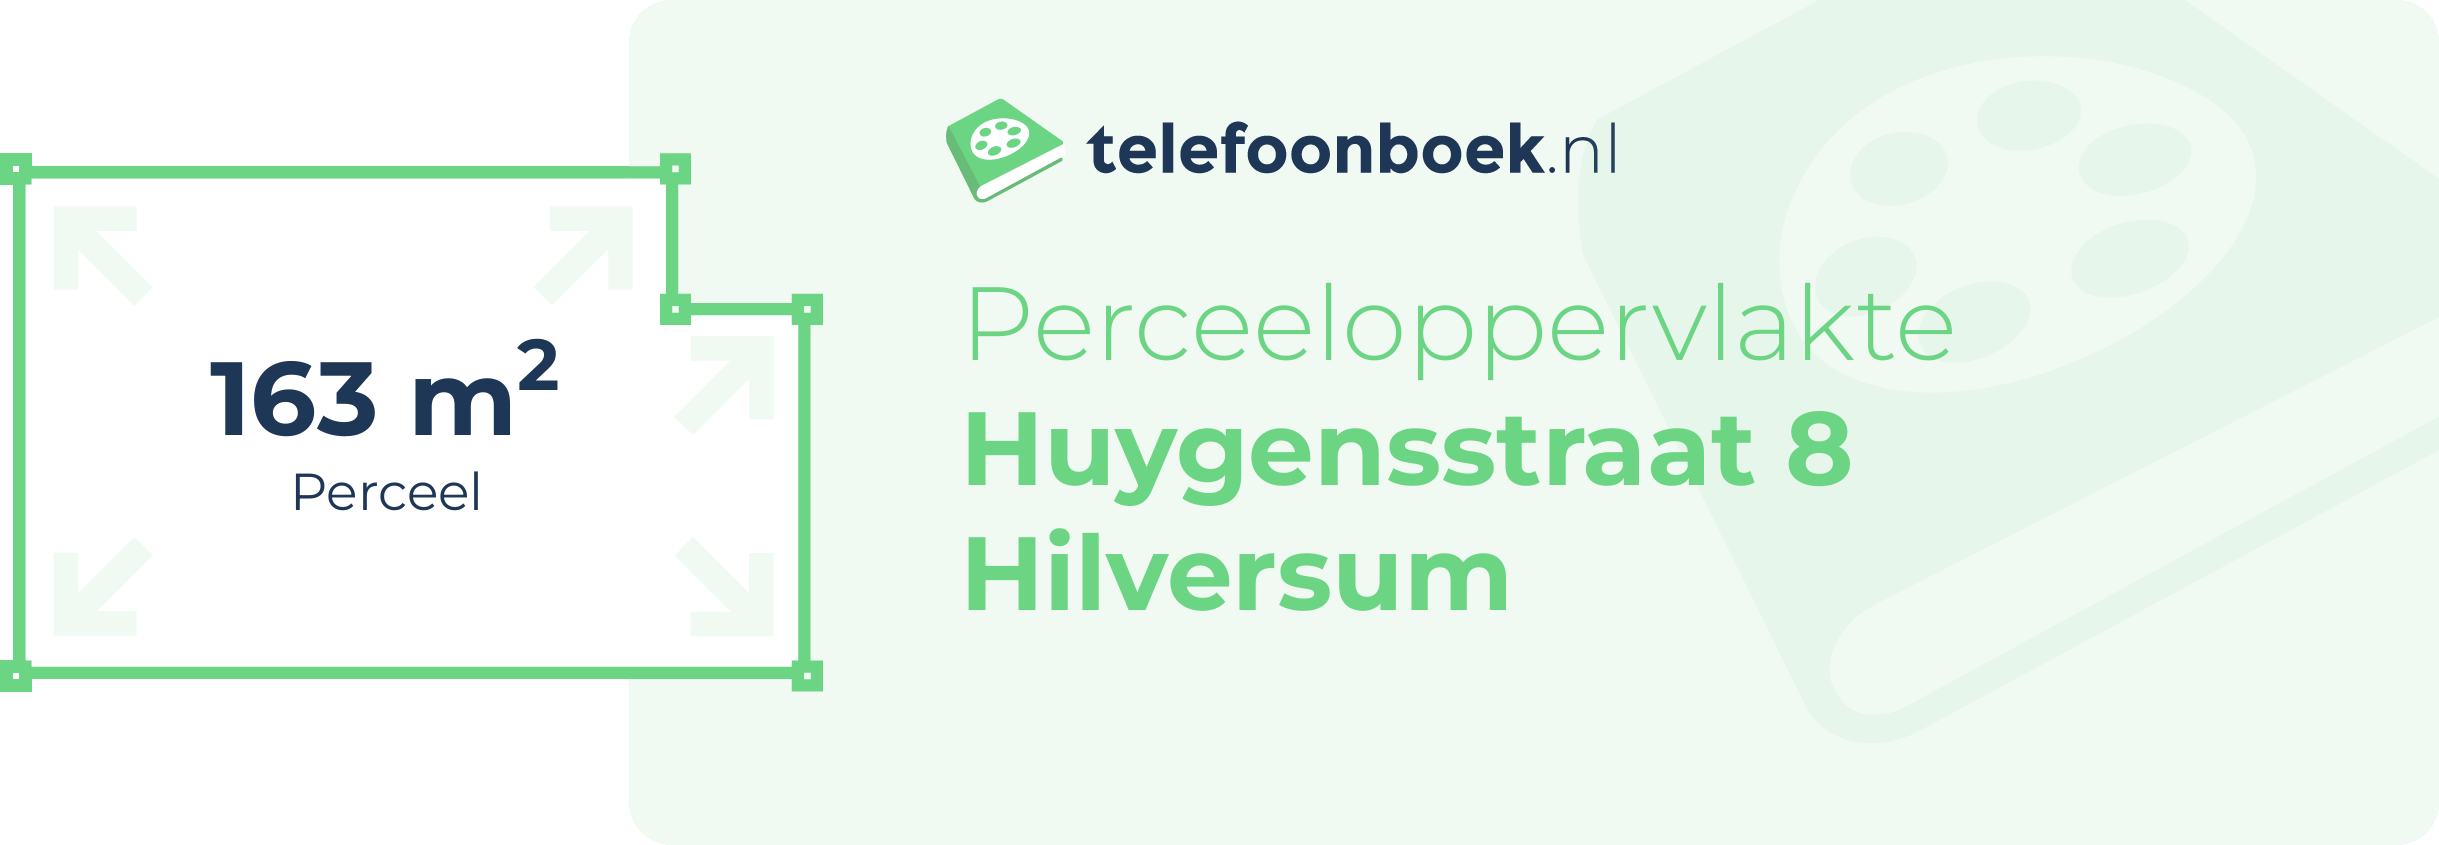 Perceeloppervlakte Huygensstraat 8 Hilversum